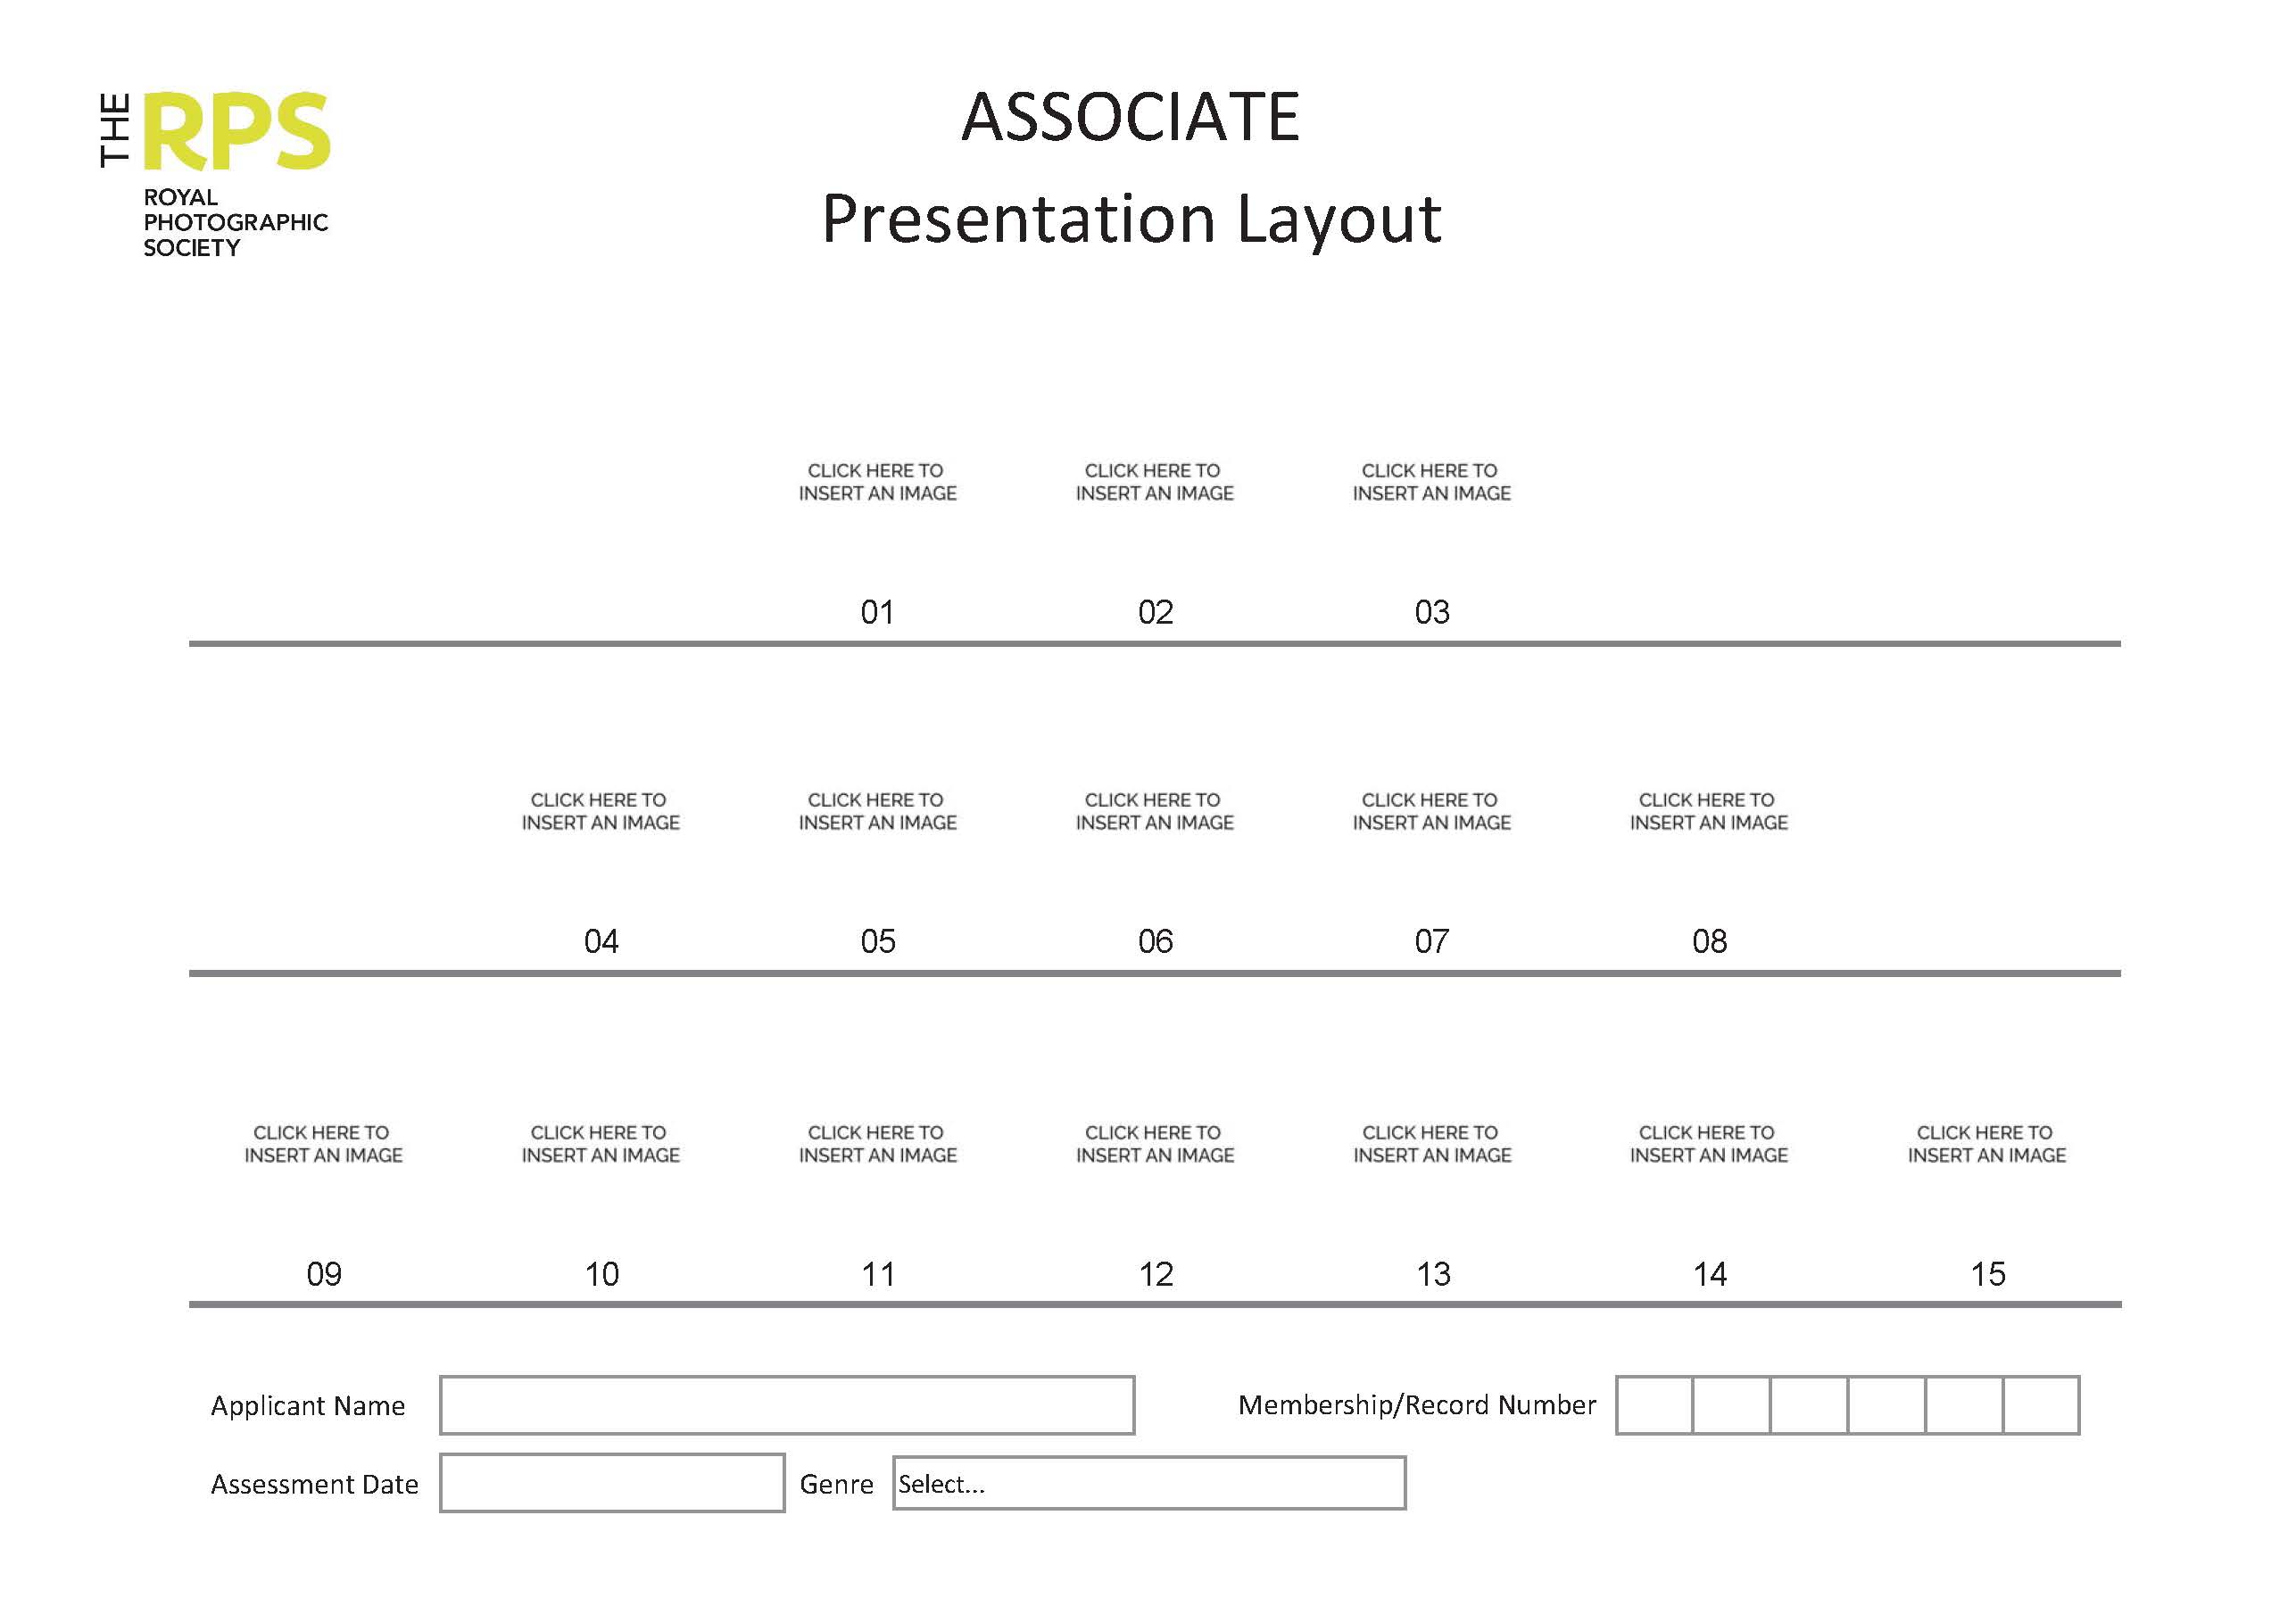 ARPS 2021 Presentation Layout 3 5 7